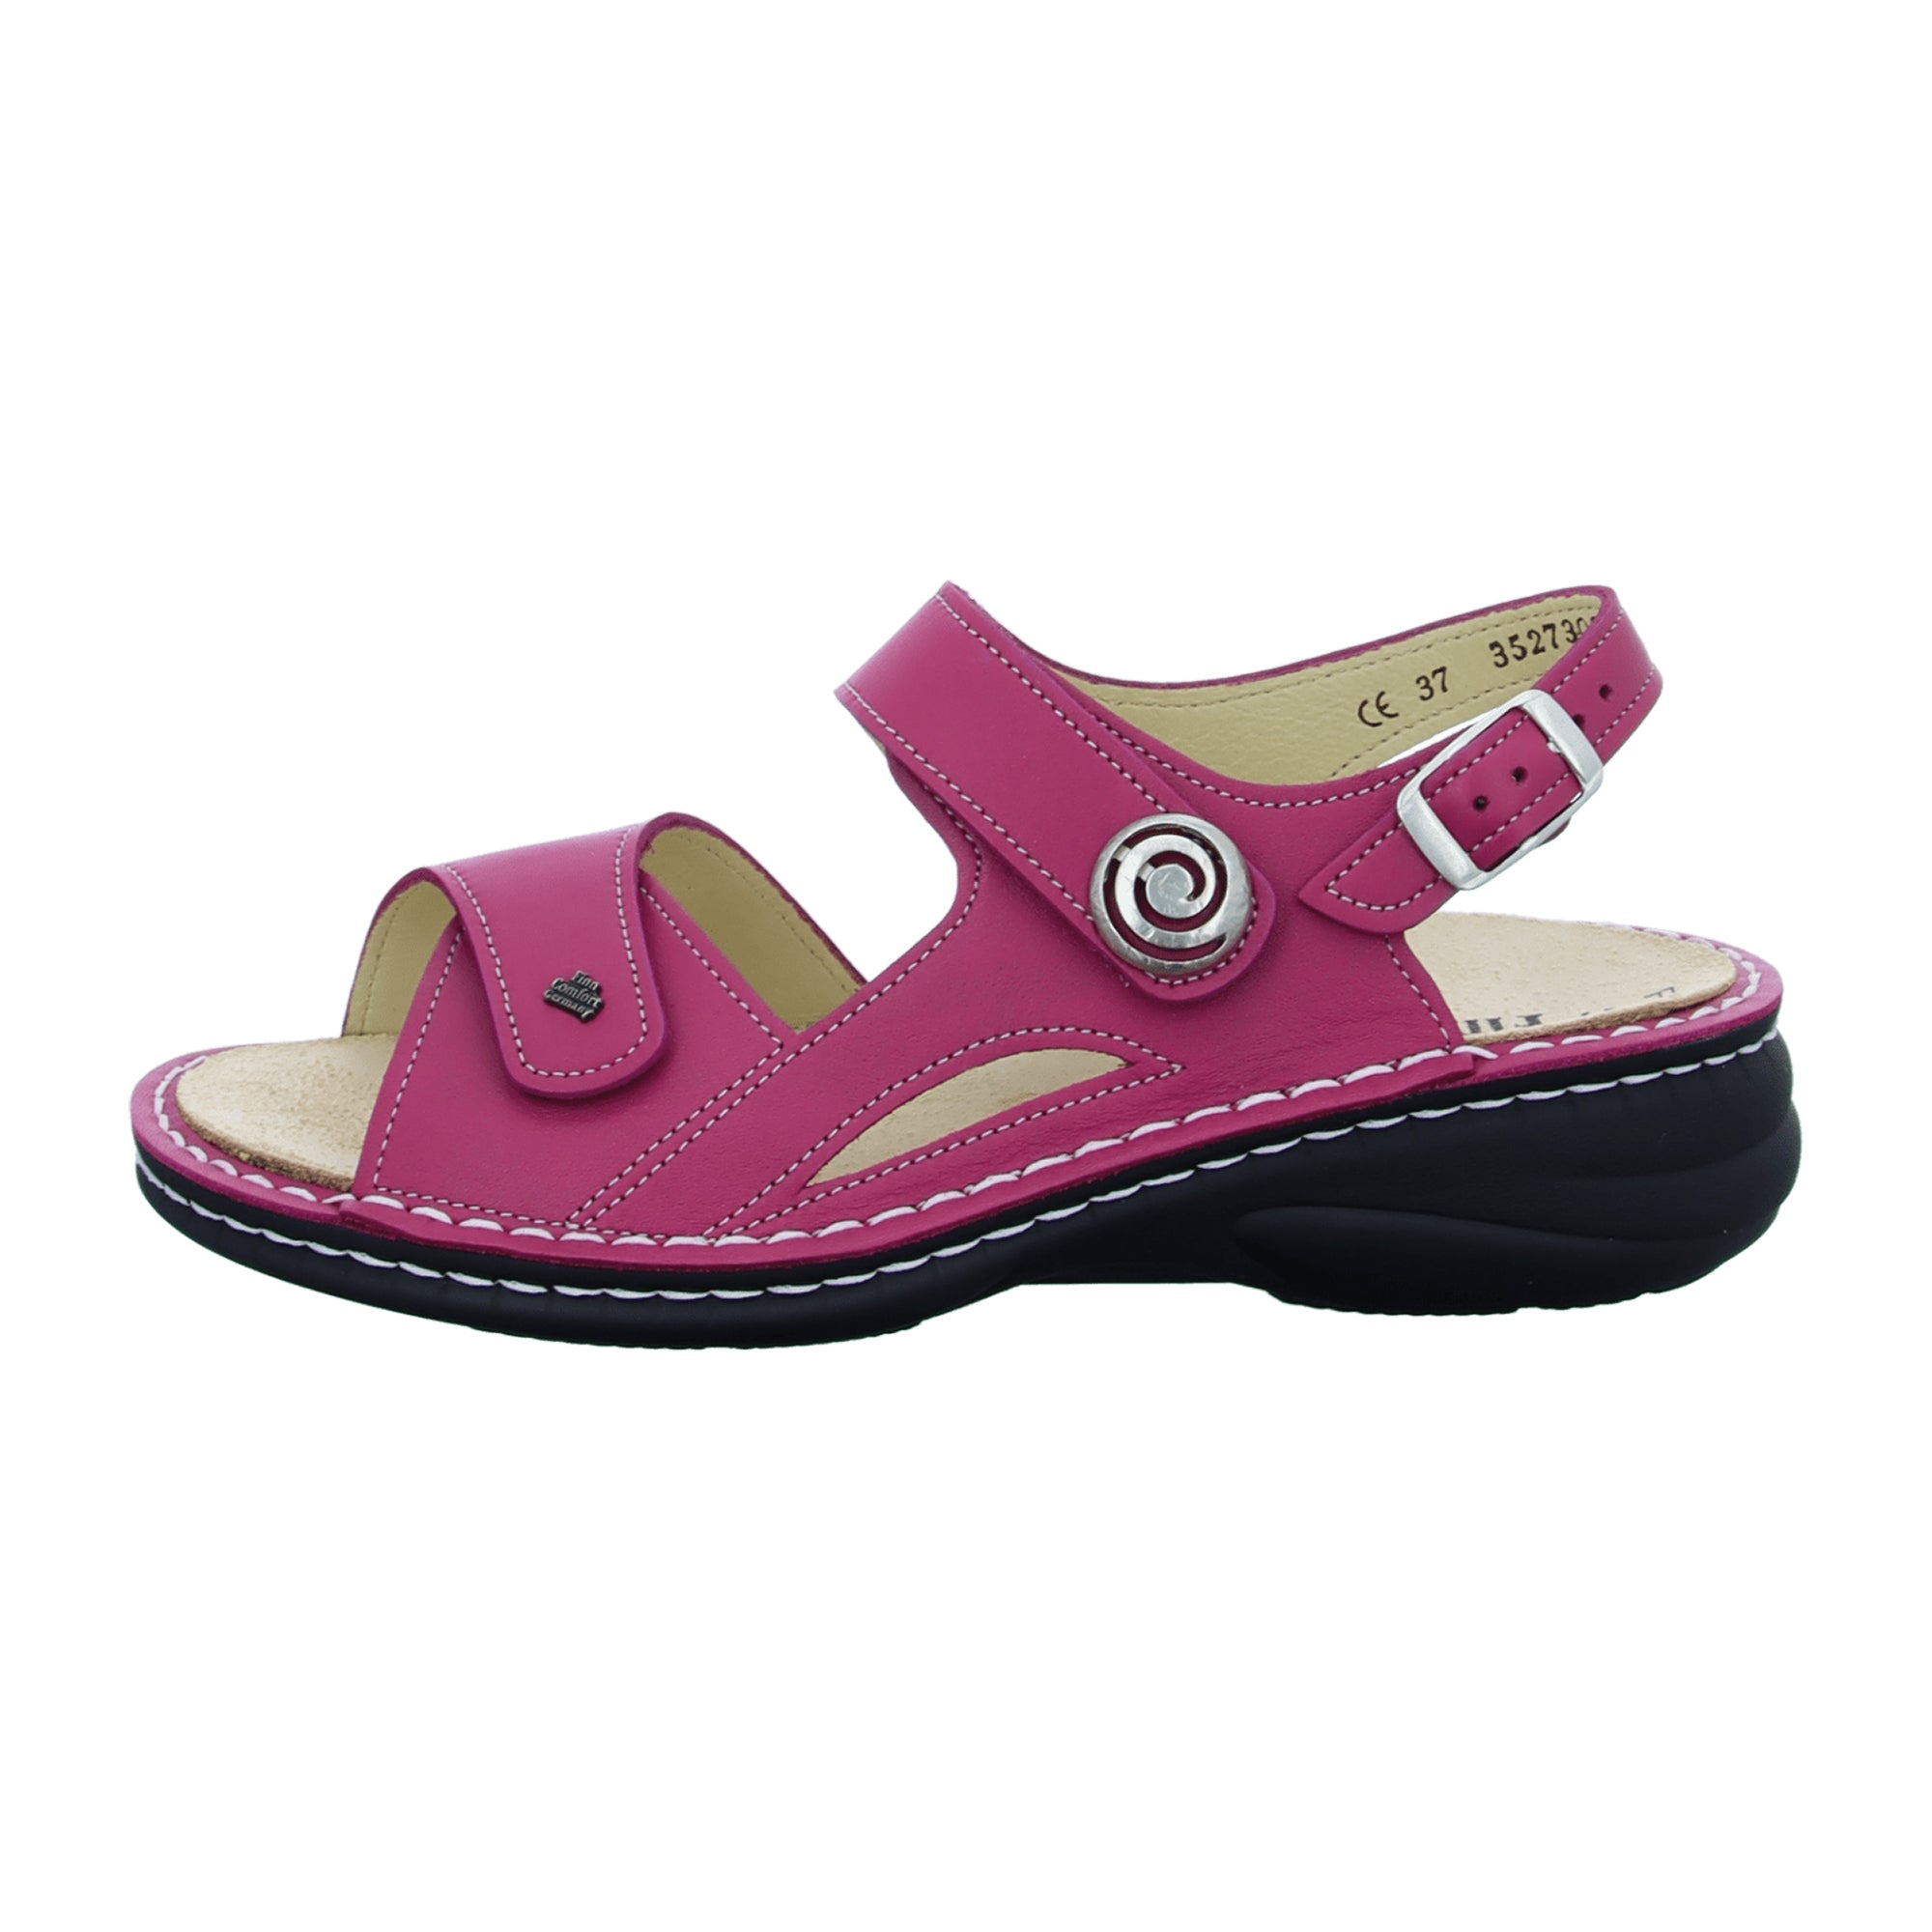 Finn Comfort Denia Women's Comfortable Slip-On Shoes, Vibrant Pink